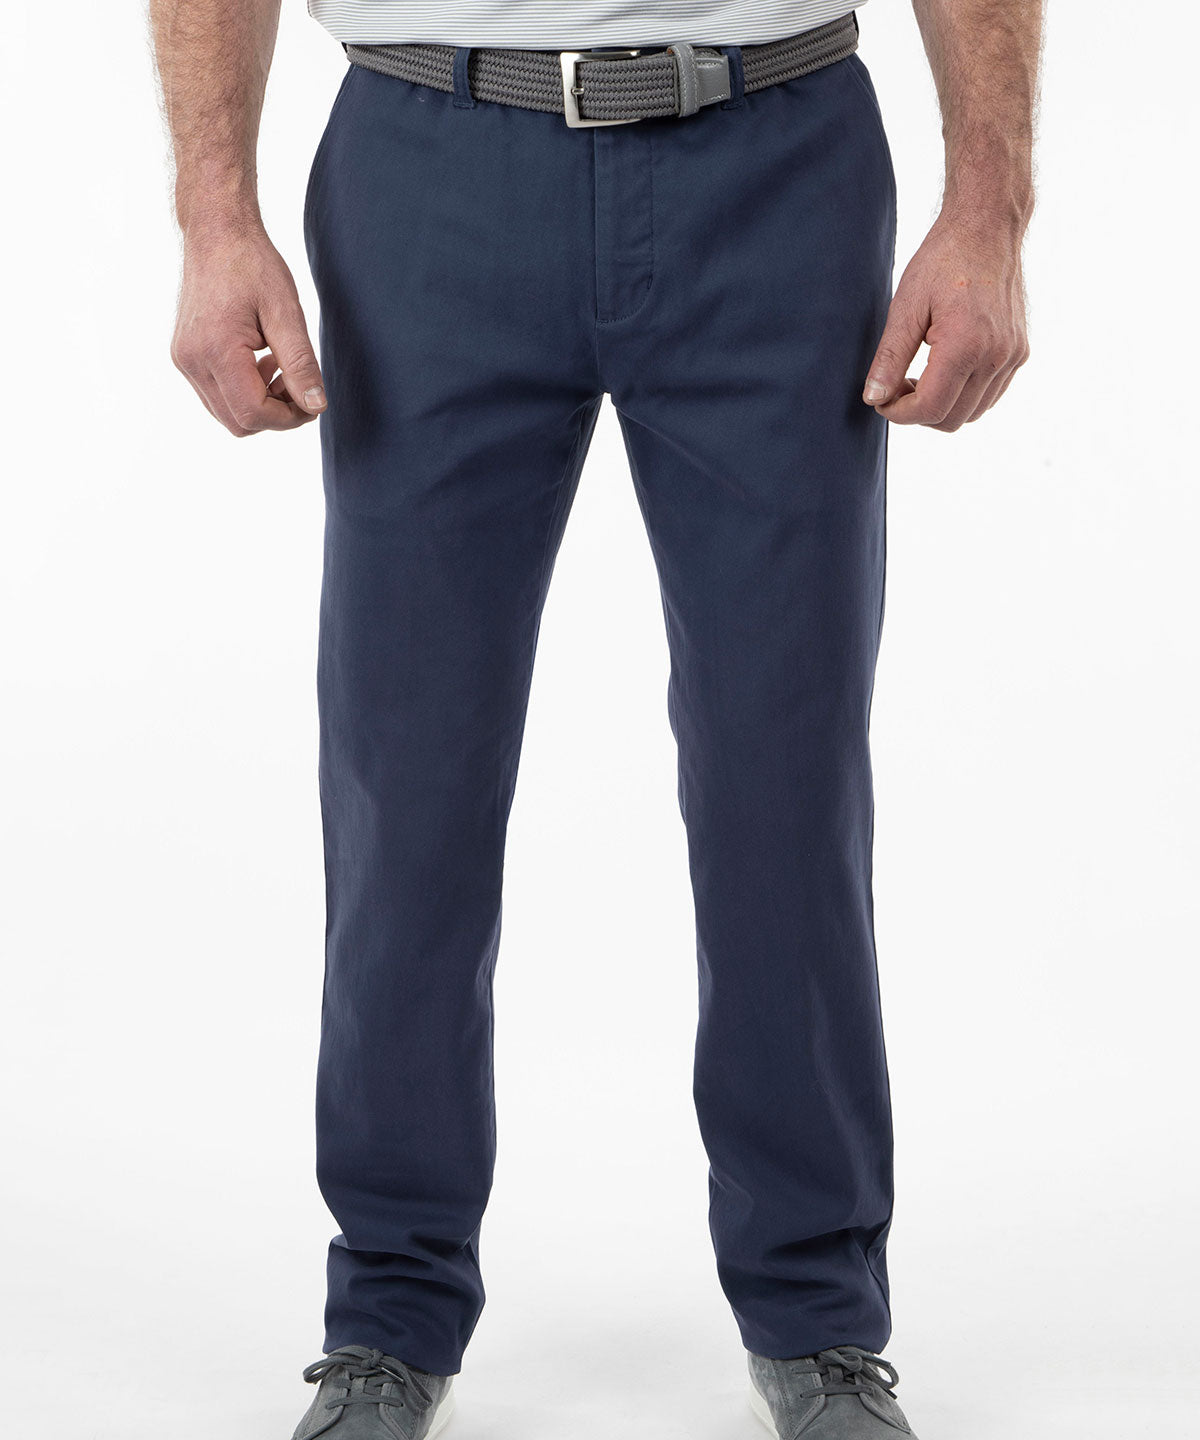 Men's Work Pants Postman Blue 100% Cotton Flex Waist Industrial REED  Uniform | eBay